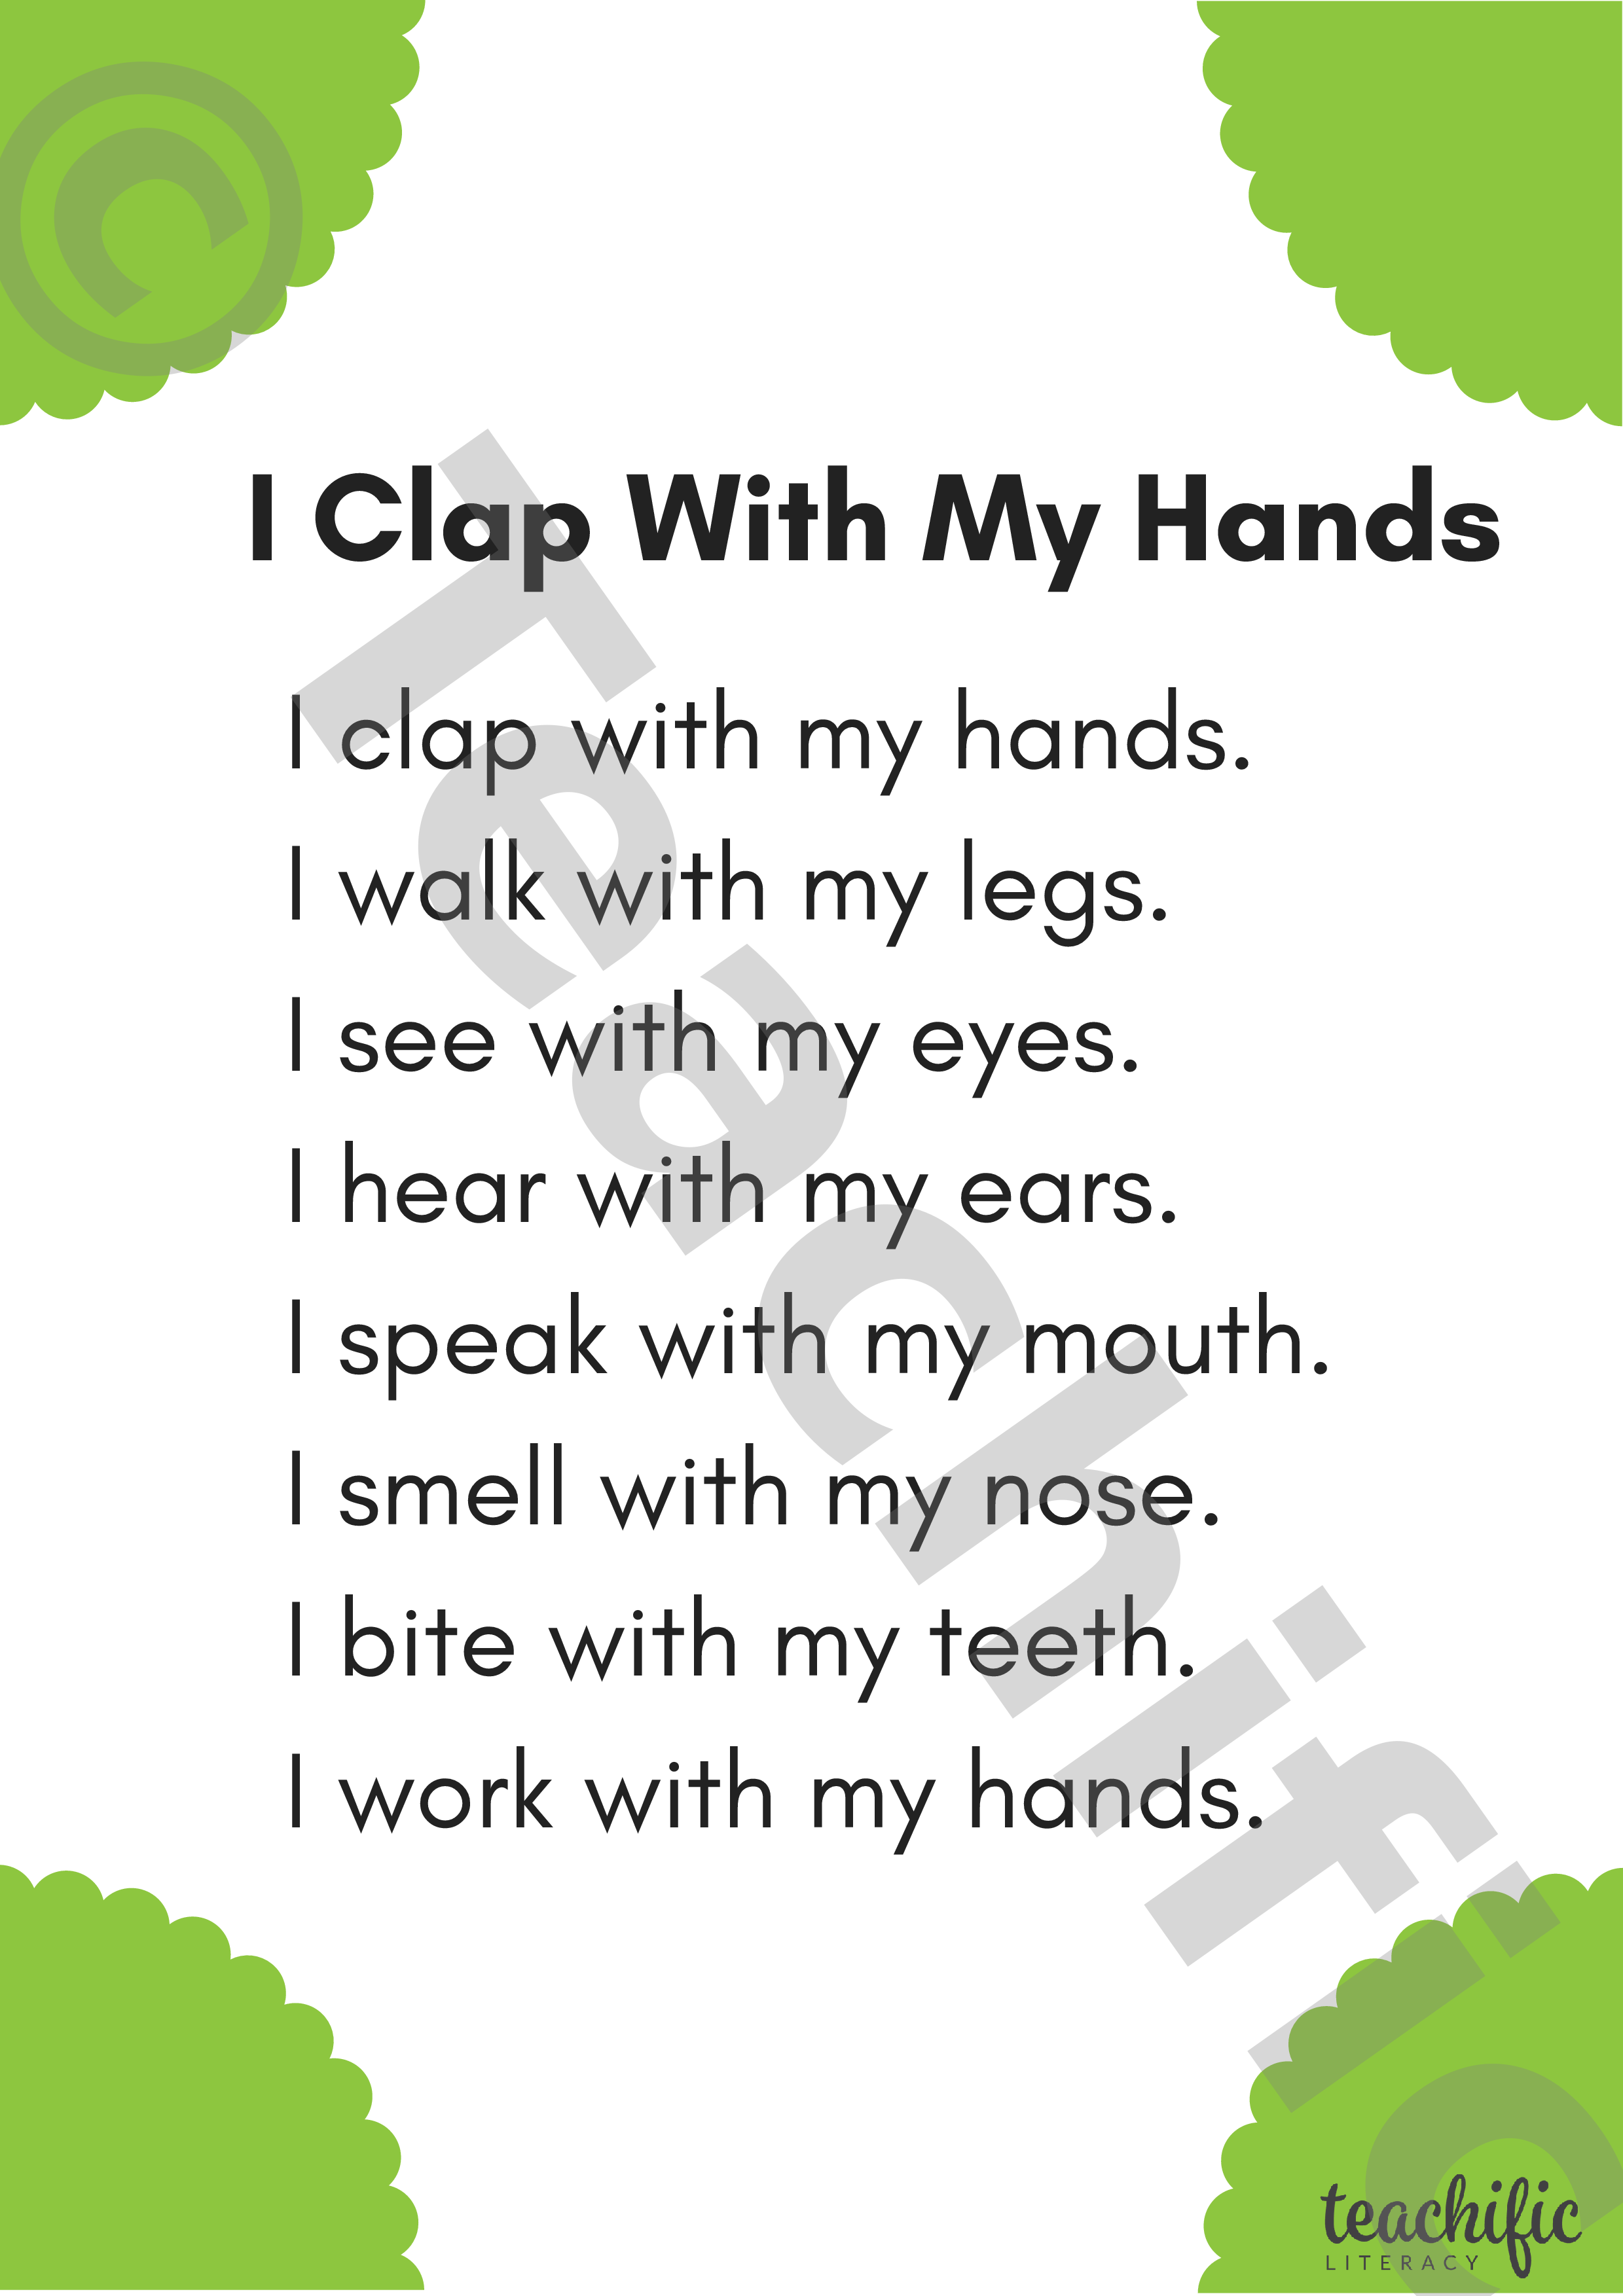 clap your hands poem free download